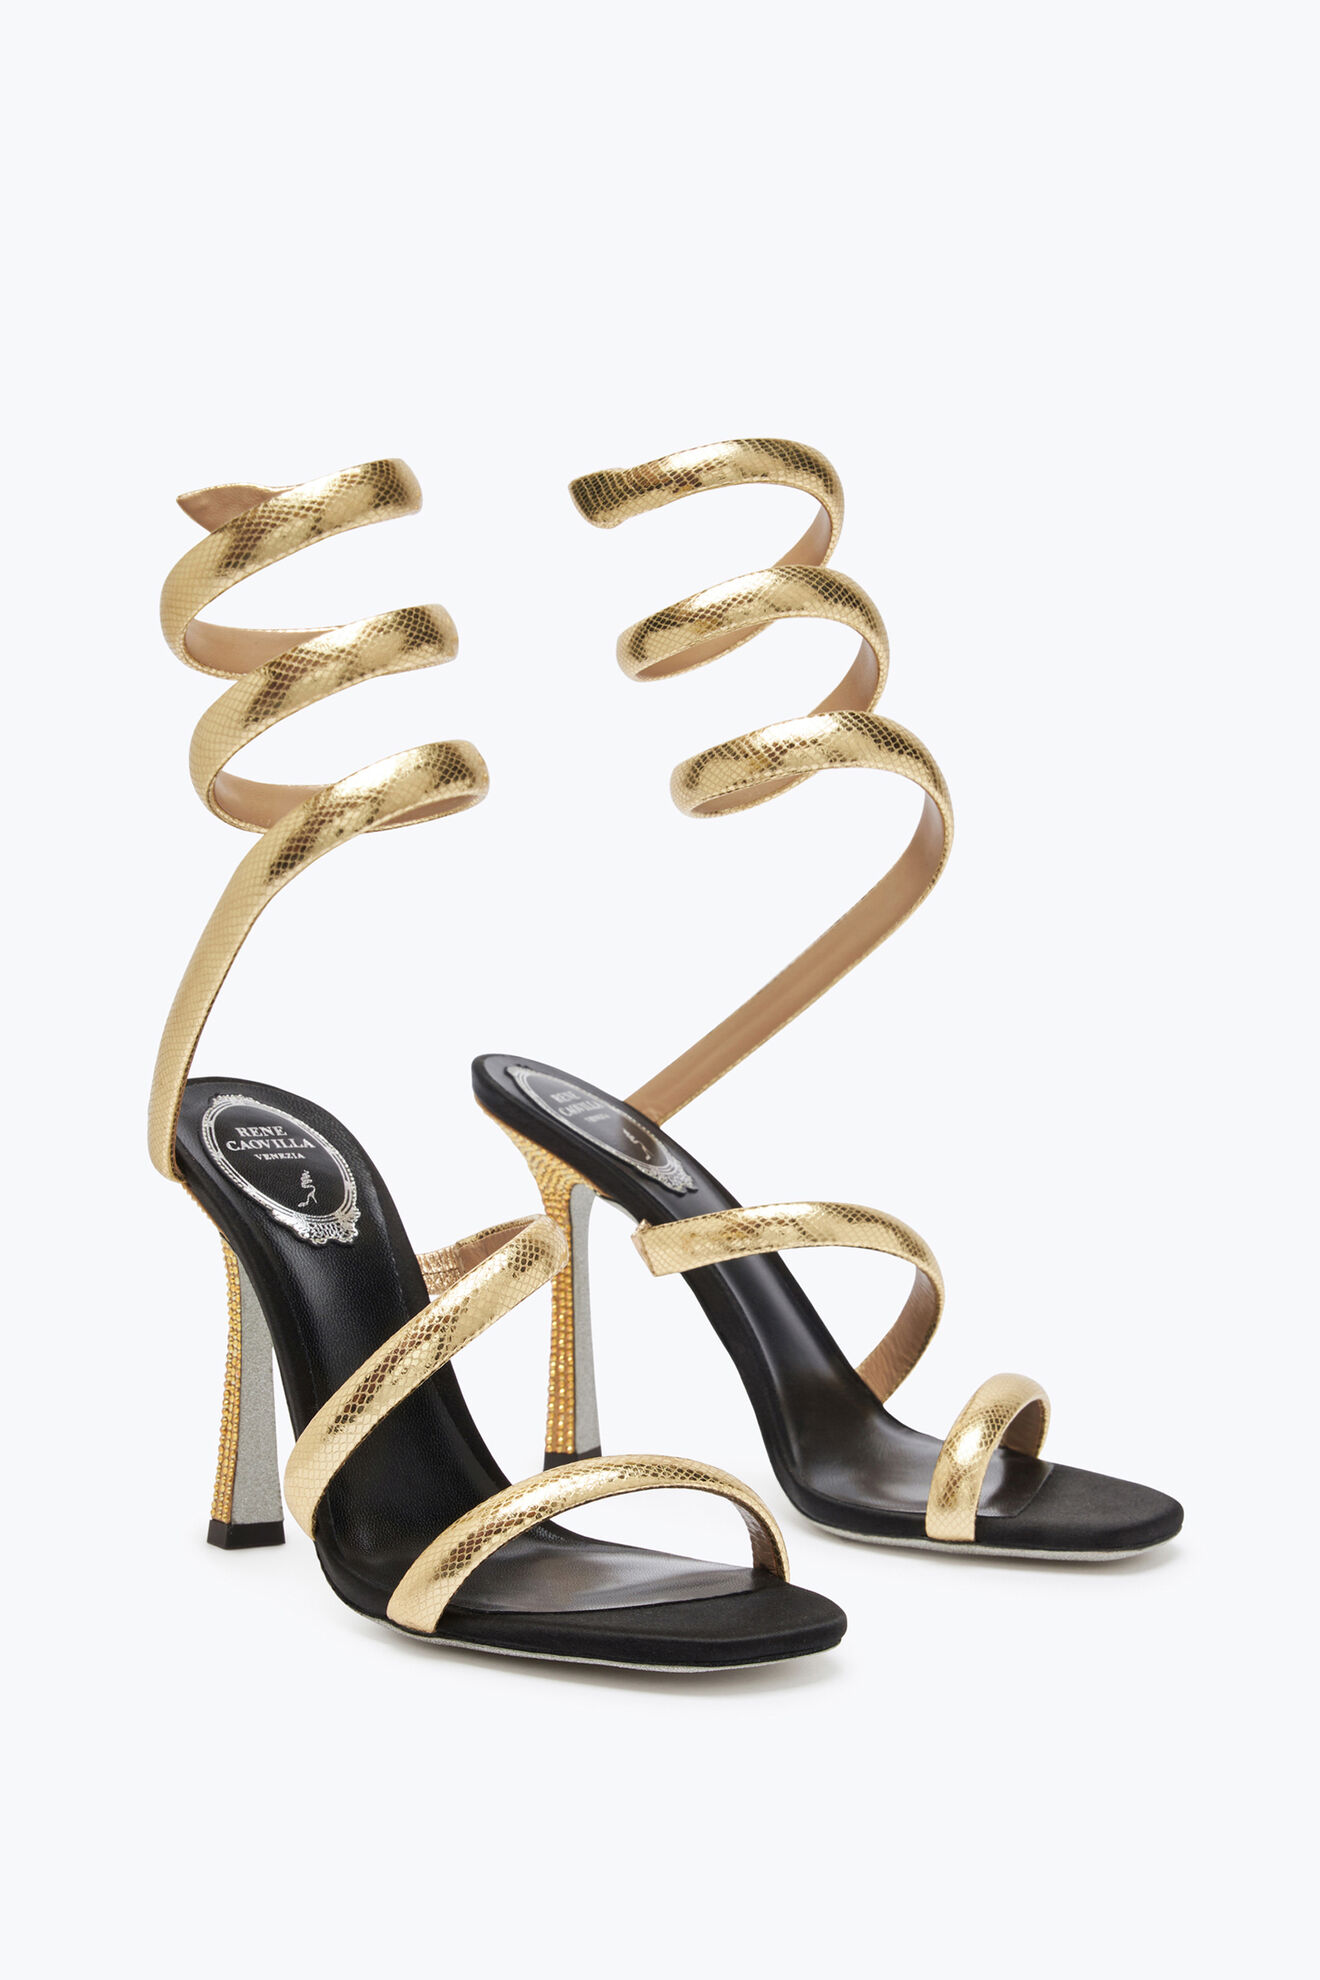 Cleopatra Black-Gold Sandal 105 Sandals in Gold for Women | Rene Caovilla®